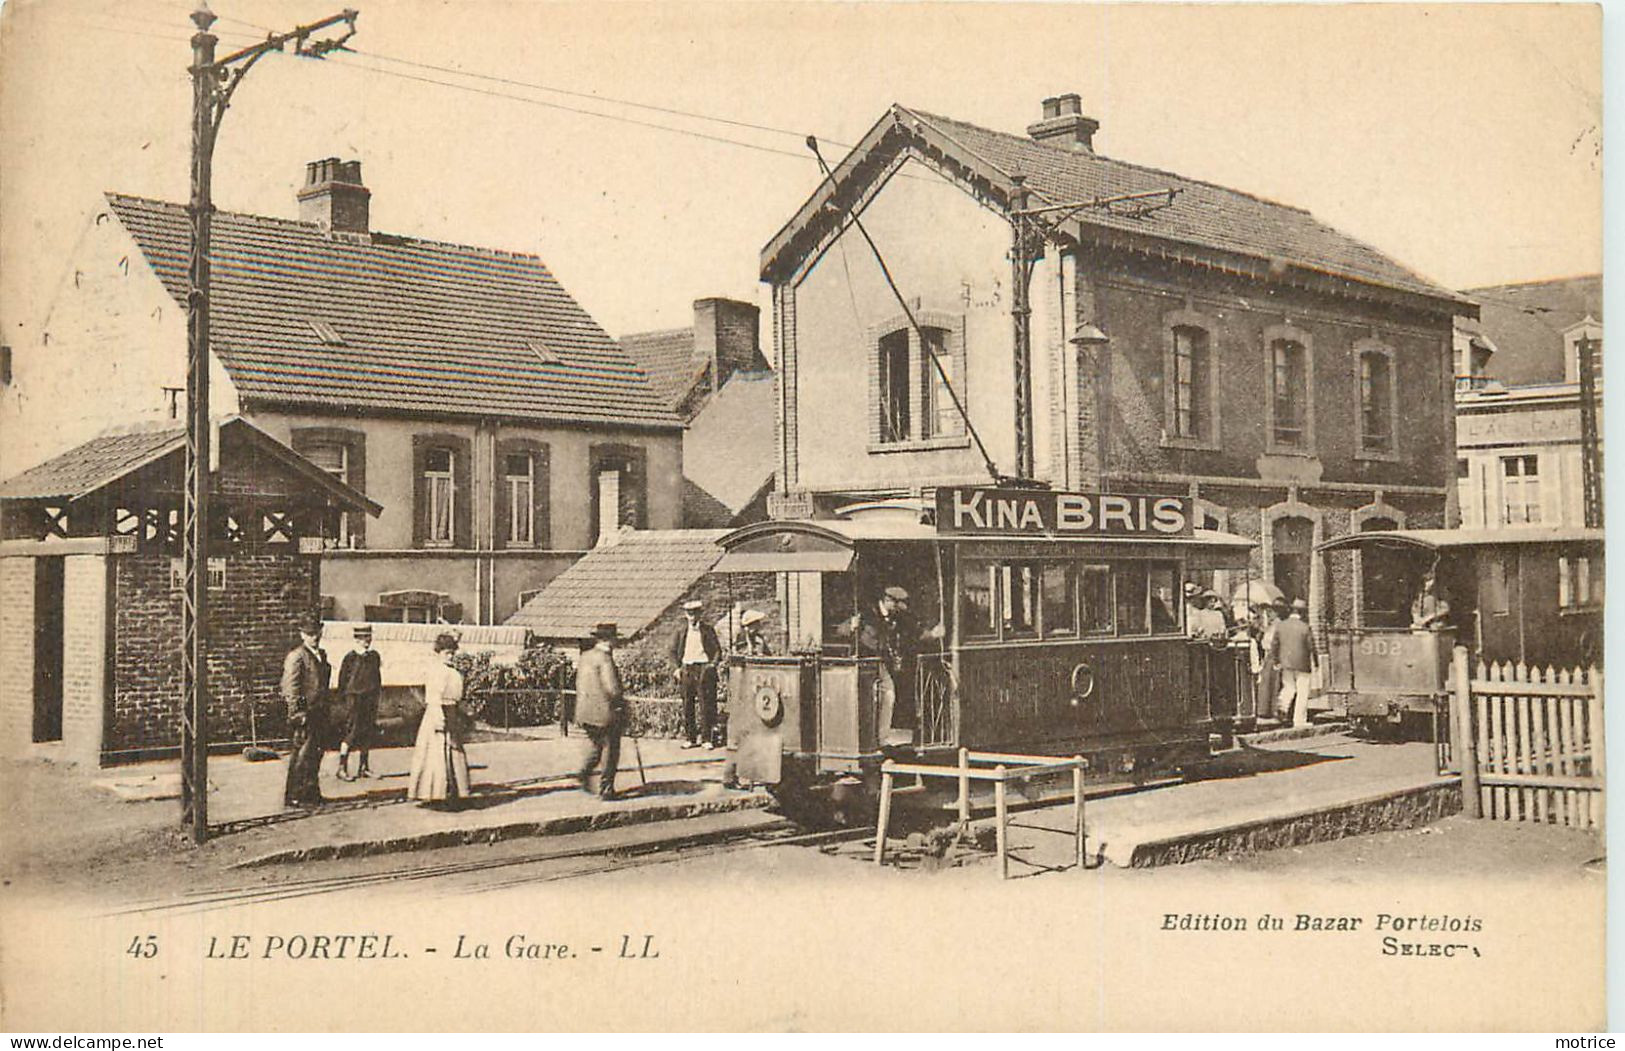 LE PORTEL - La Gare, Tramways. - Strassenbahnen